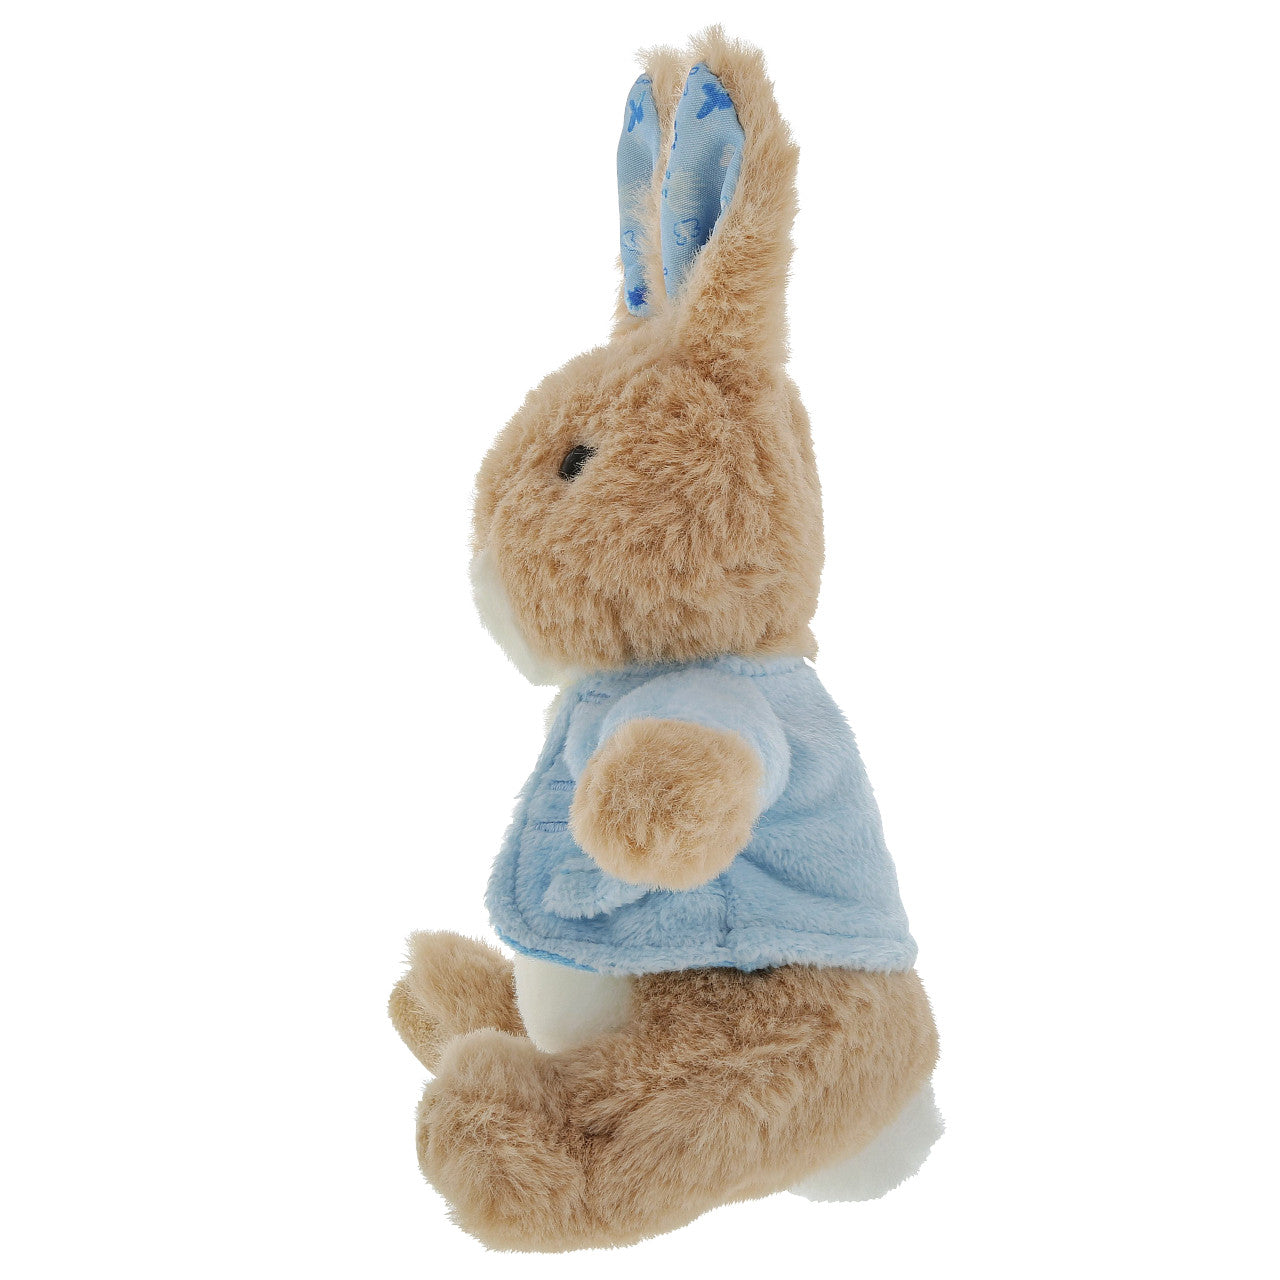 GOSH Peter Rabbit (Small)